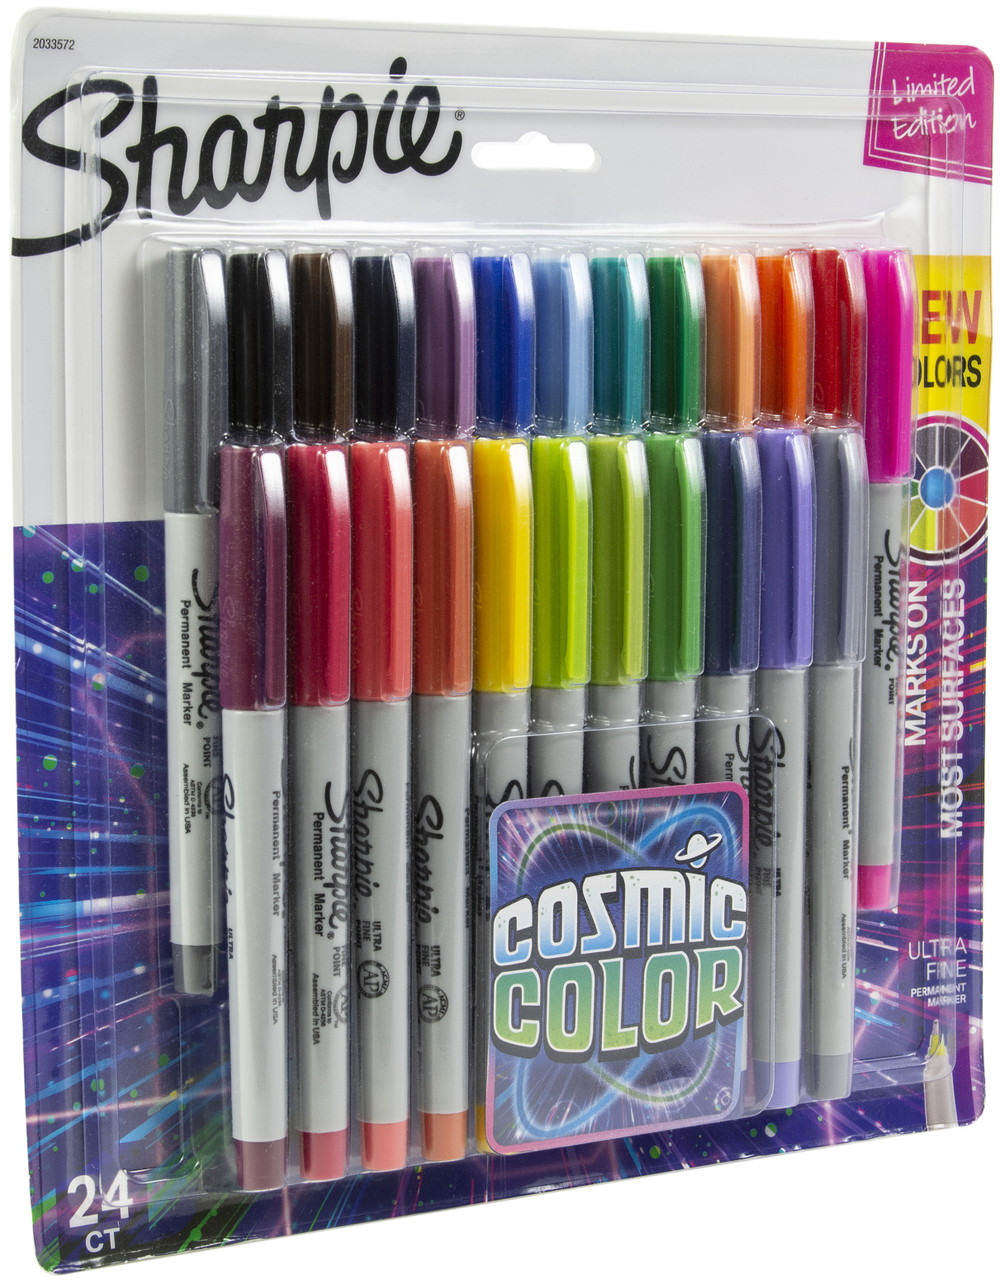 Sharpie Cosmic Color Marker